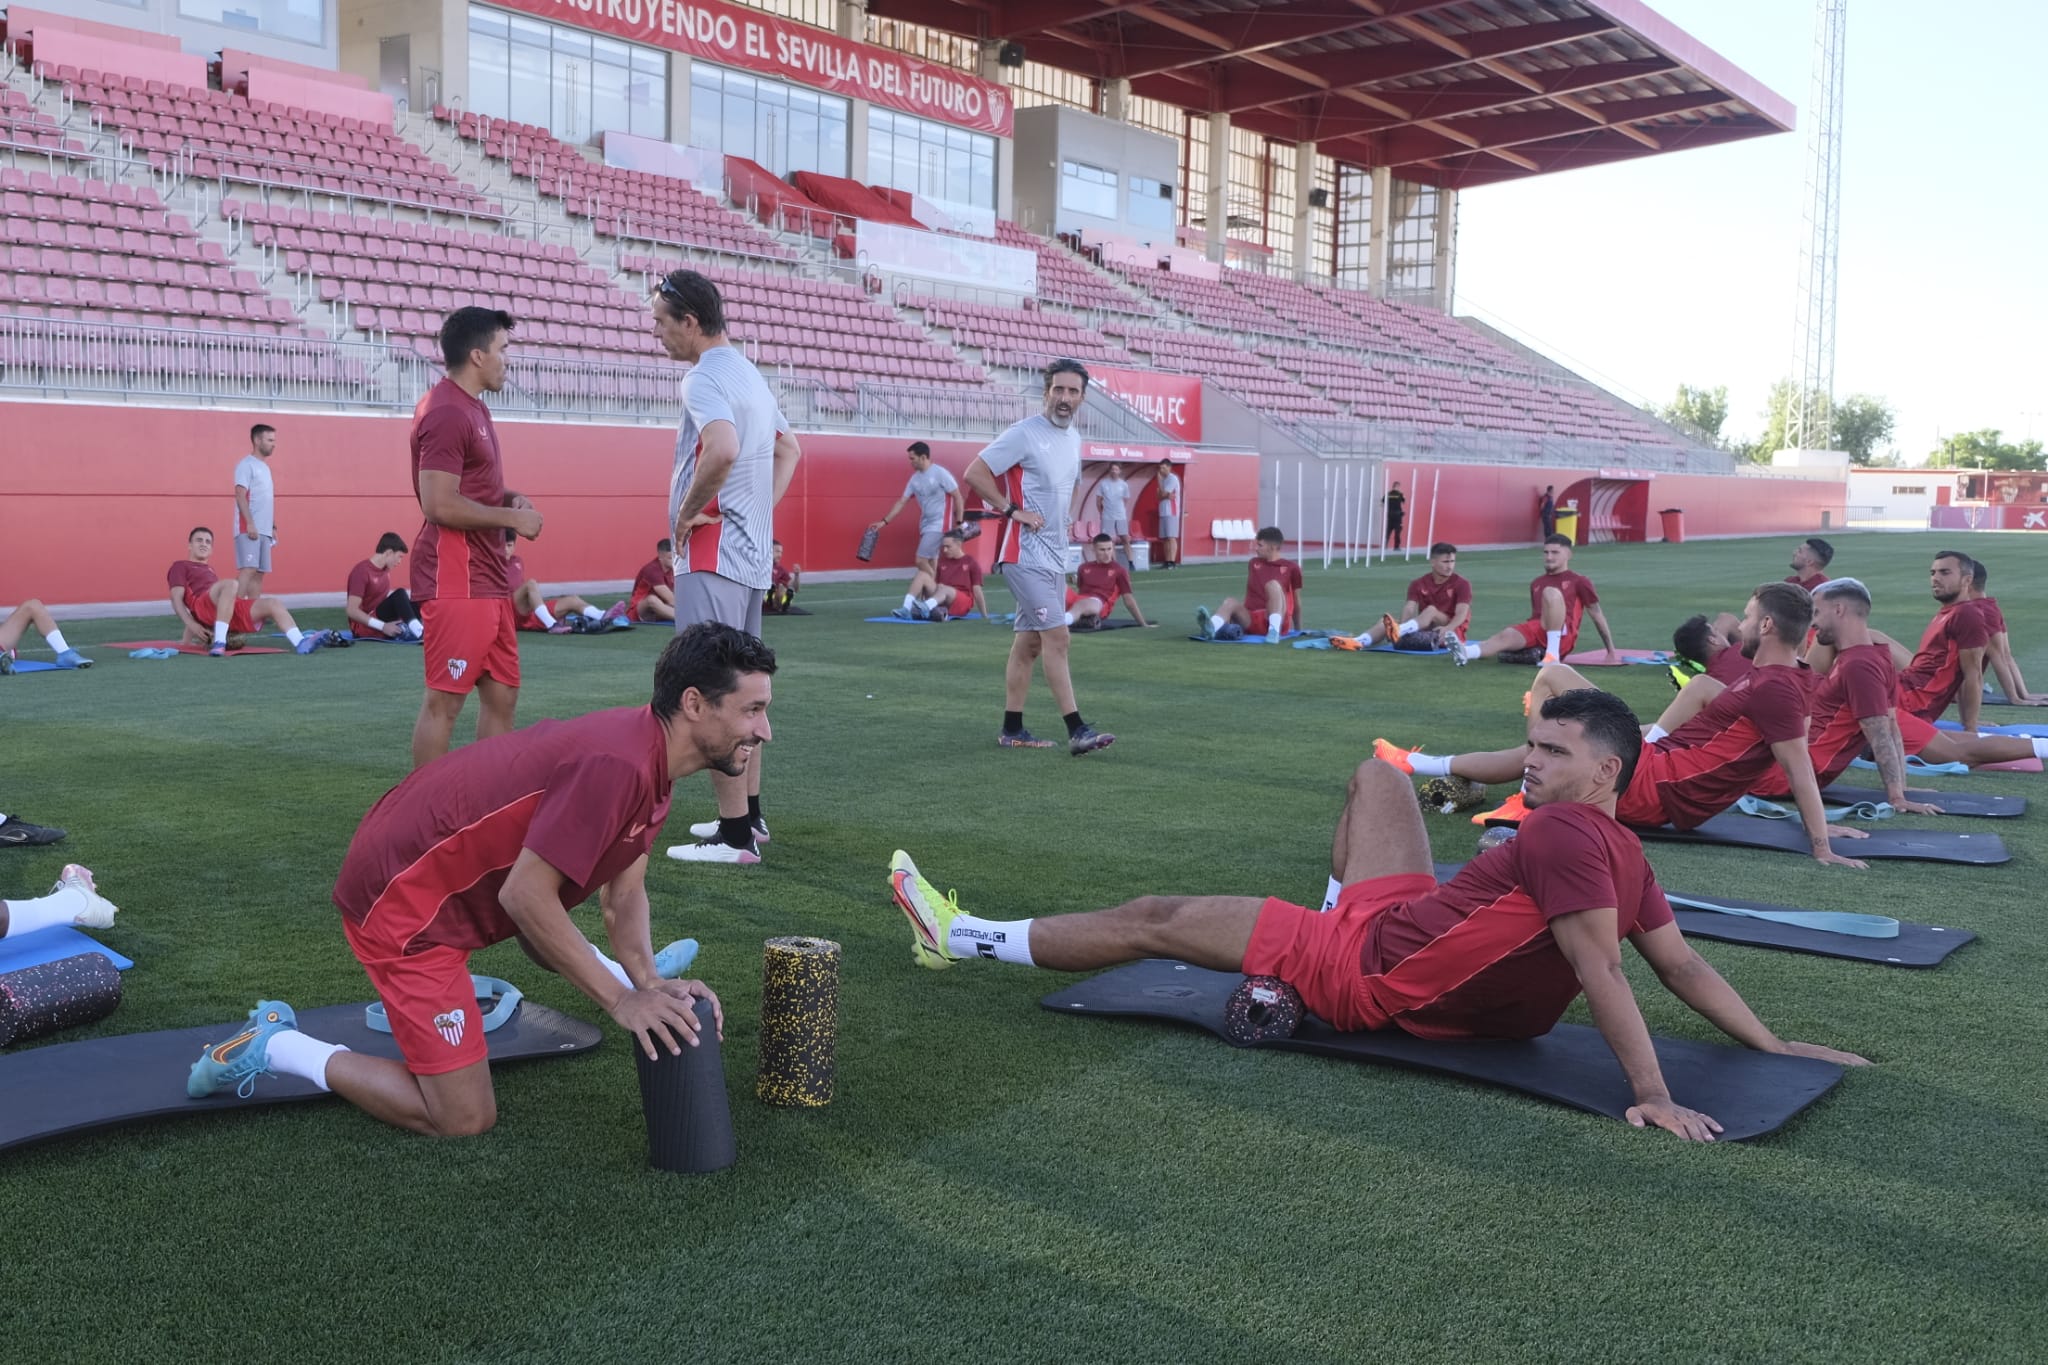 Sevilla FC first training session of 22/23